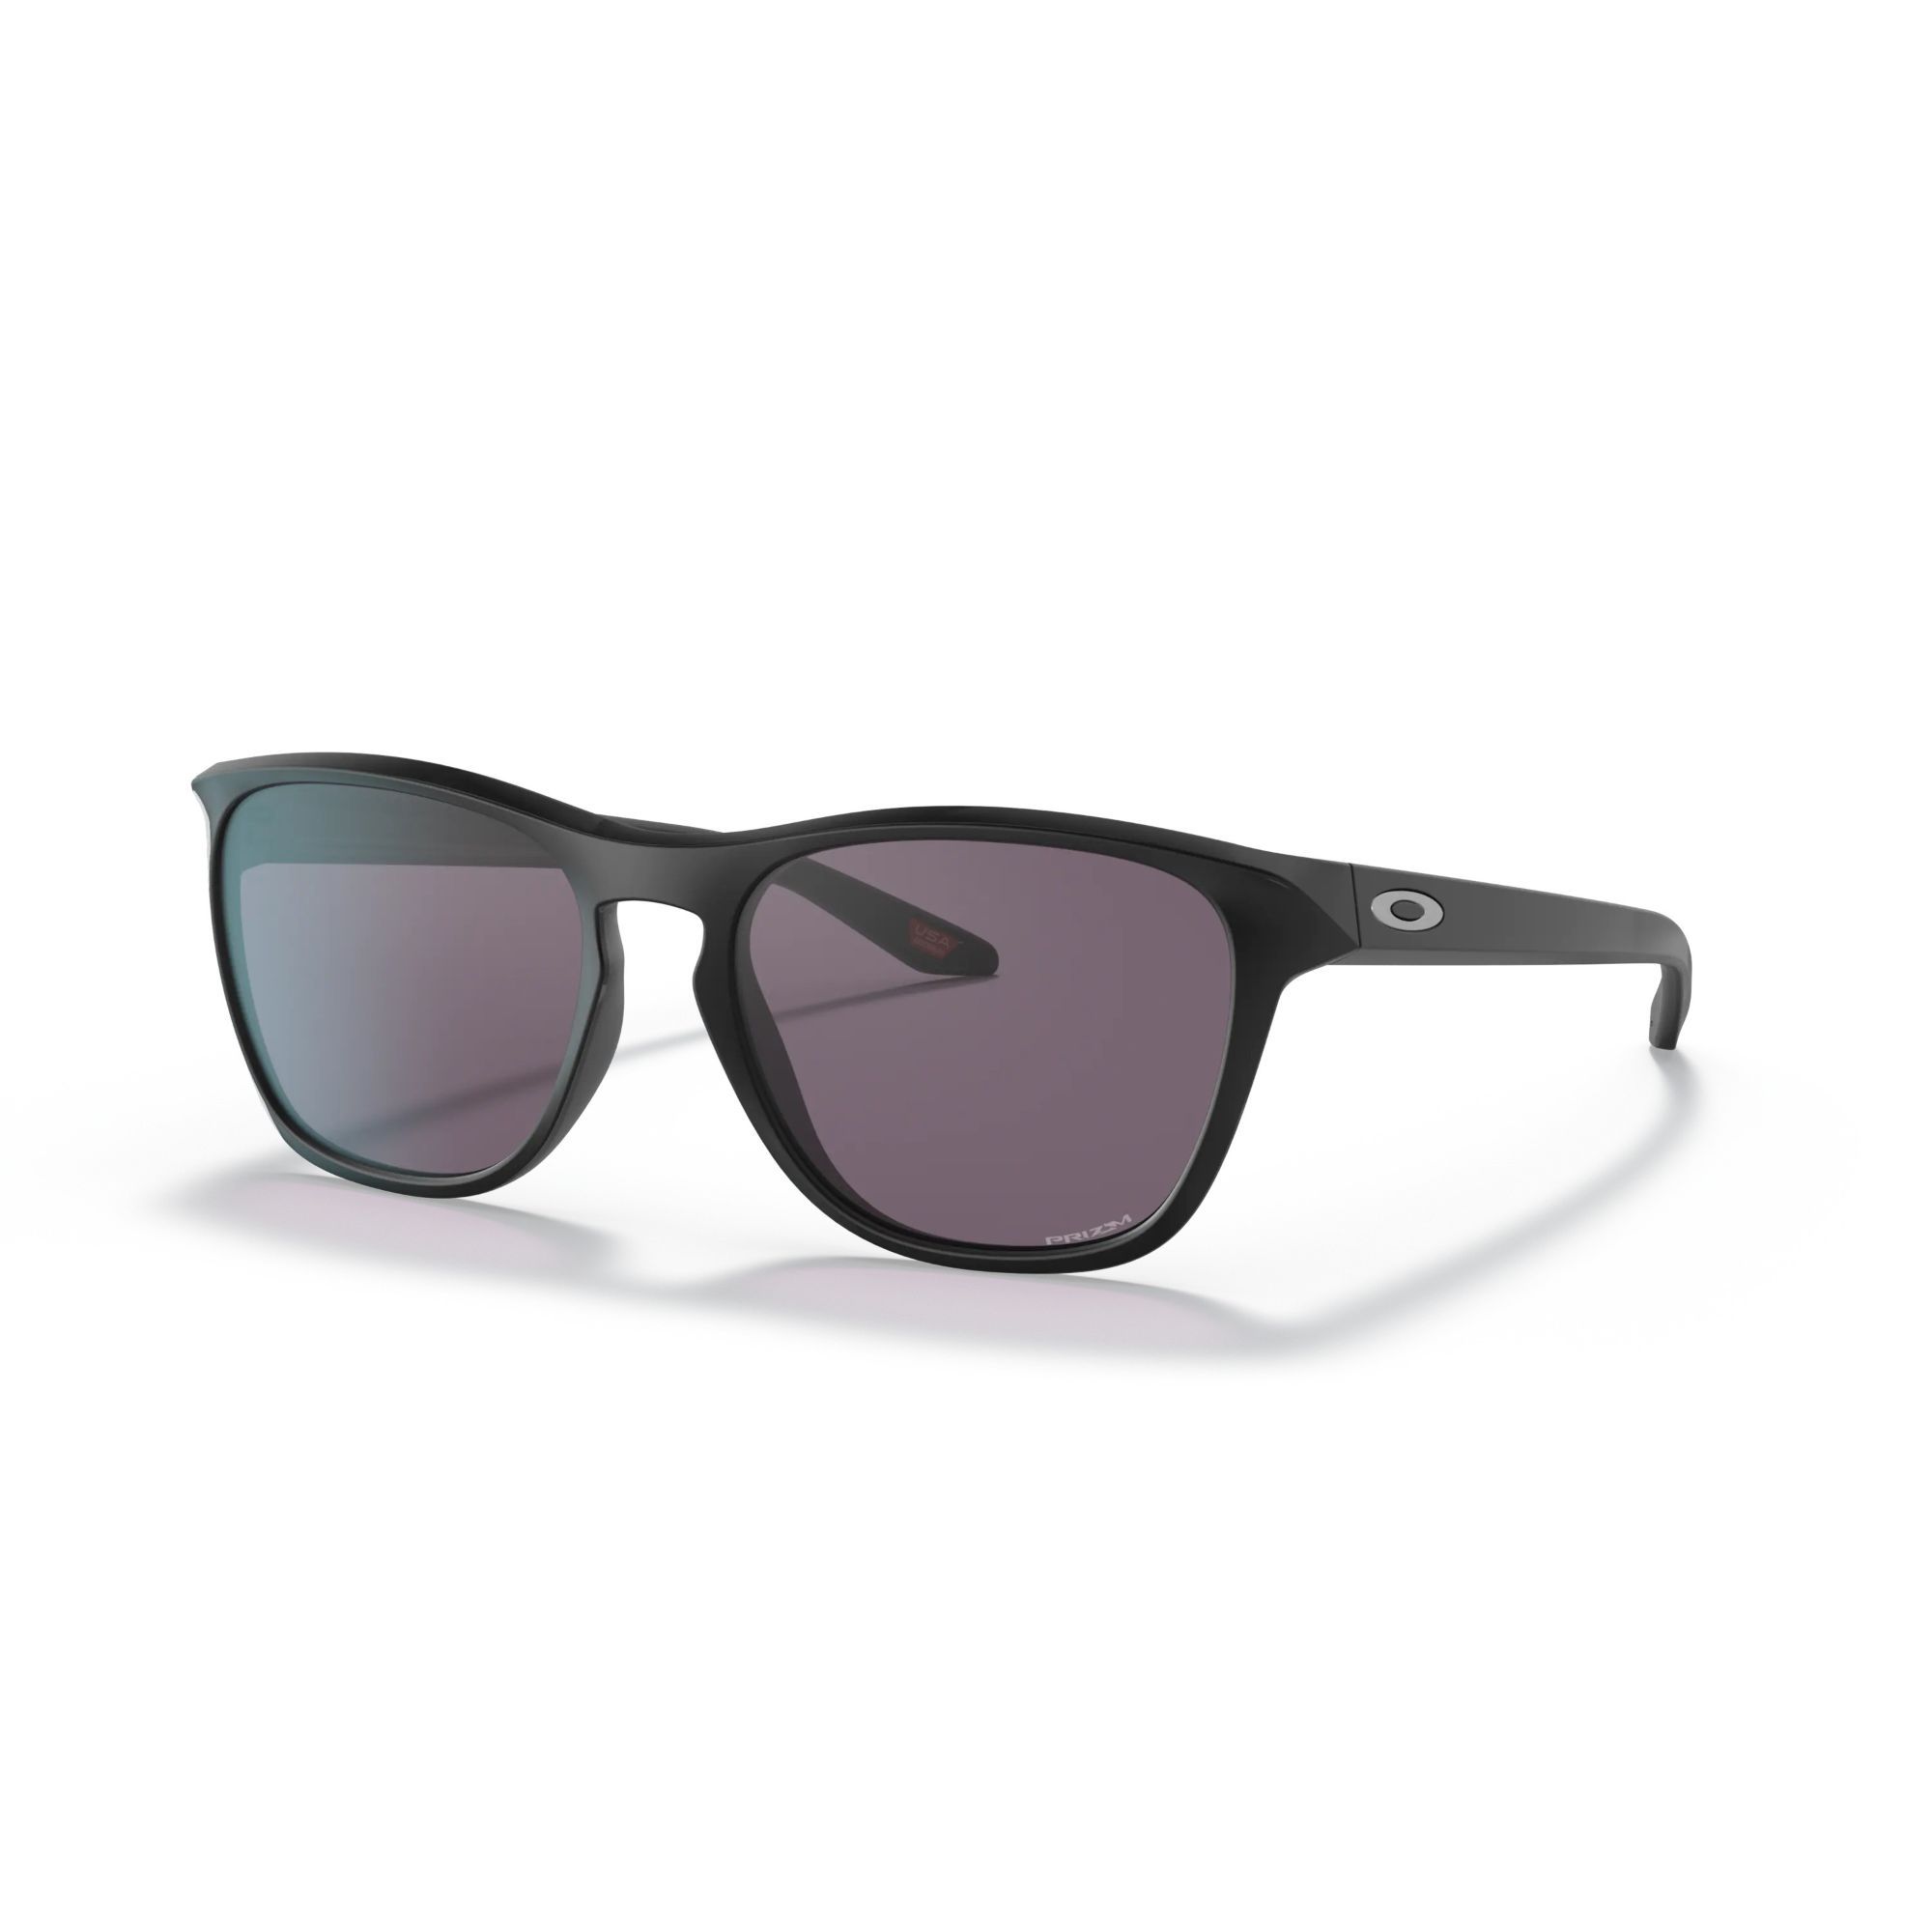 Manorburn Sunglasses OO9479-01 size 56